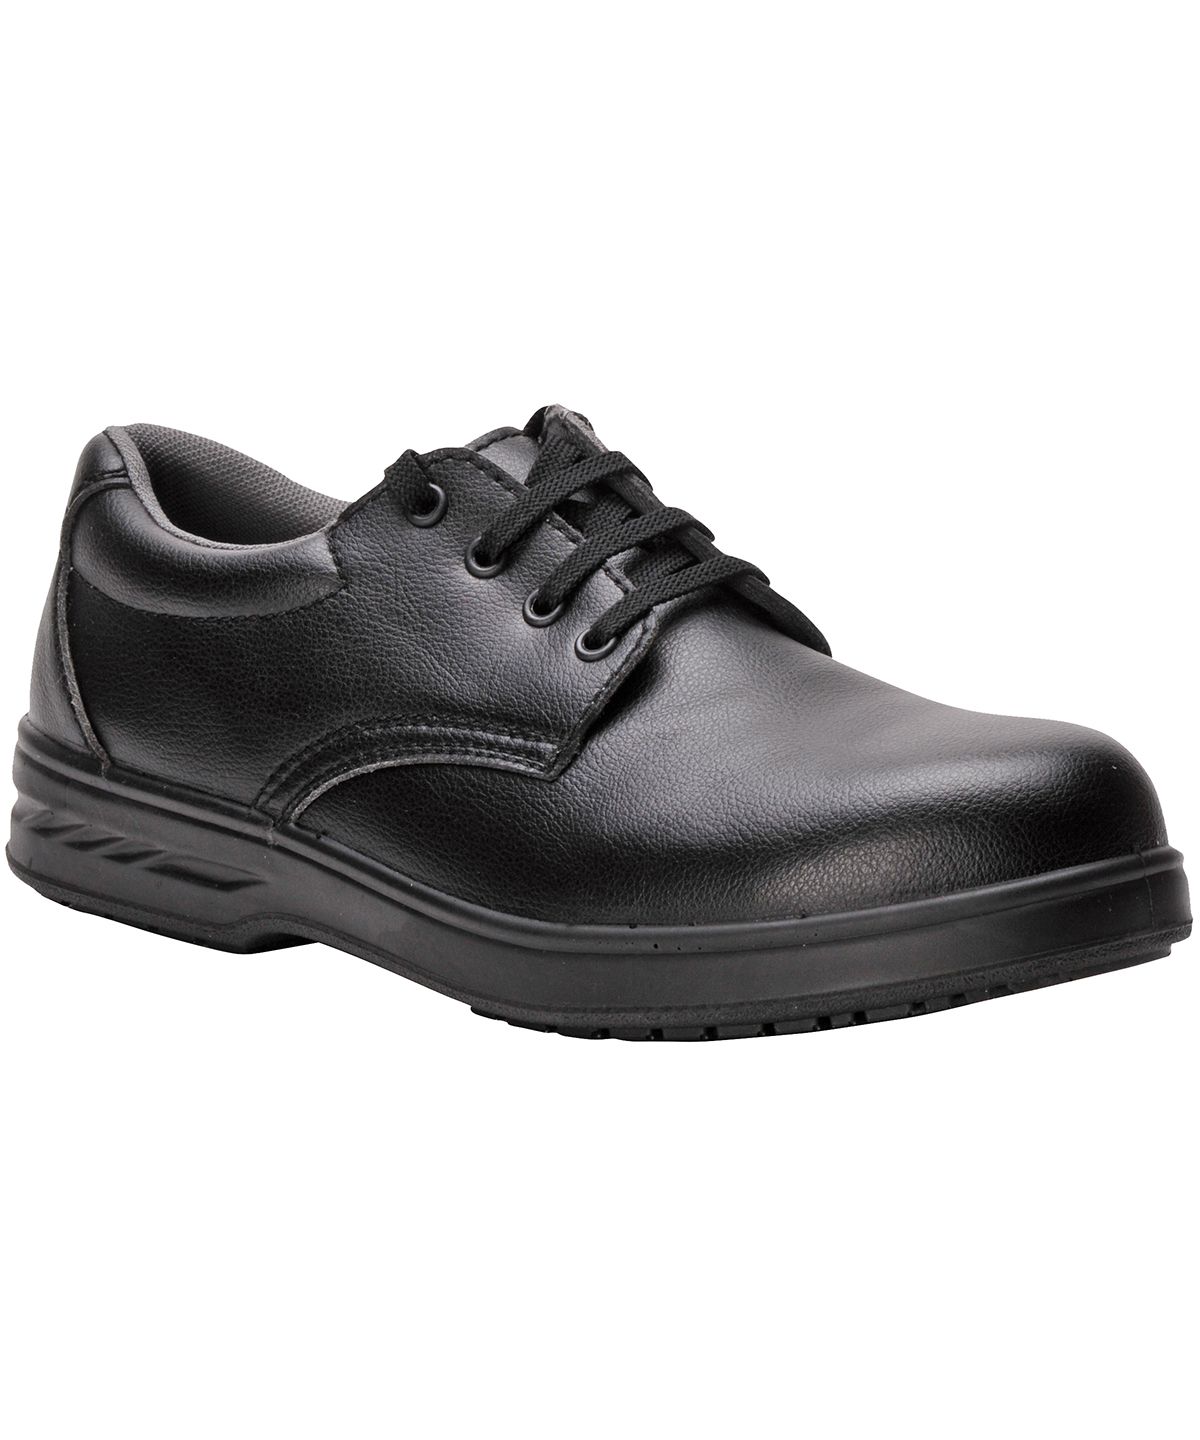 Steelite™ Laced Safety Shoe S2 (Fw80) Black Size 10